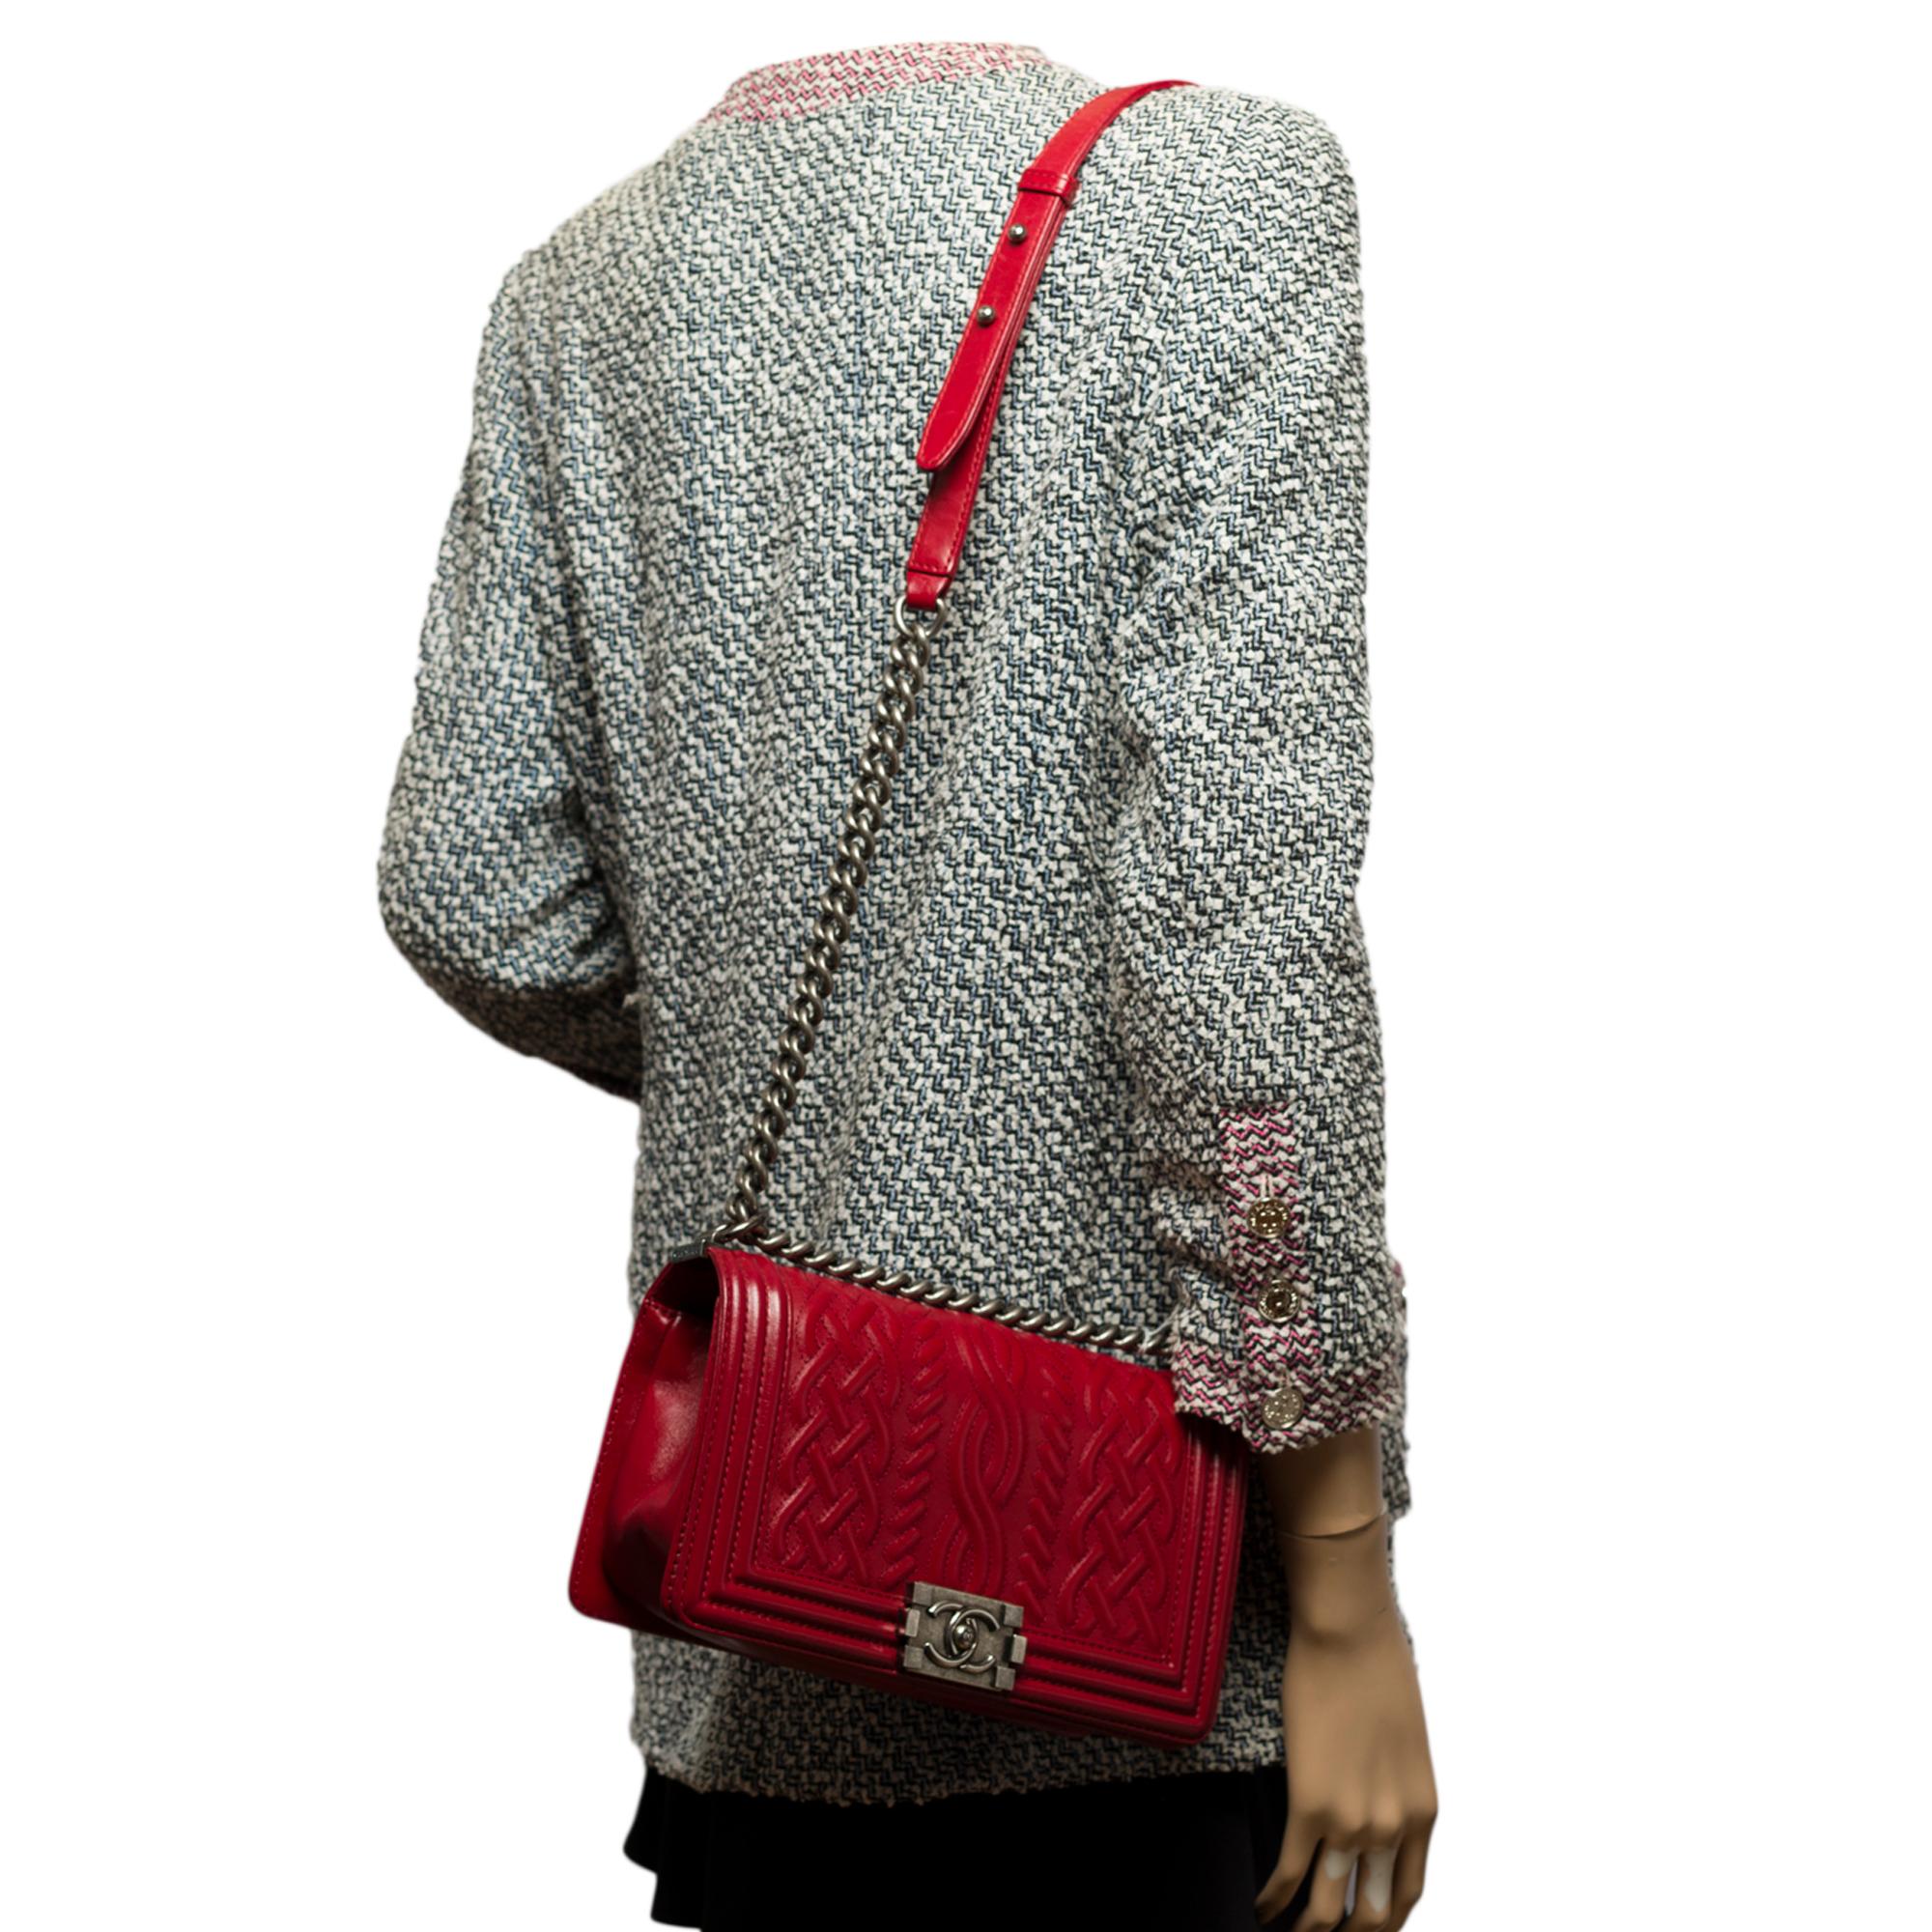 Limited Edition Chanel Boy Old medium shoulder bag in red embossed leather, SHW 5